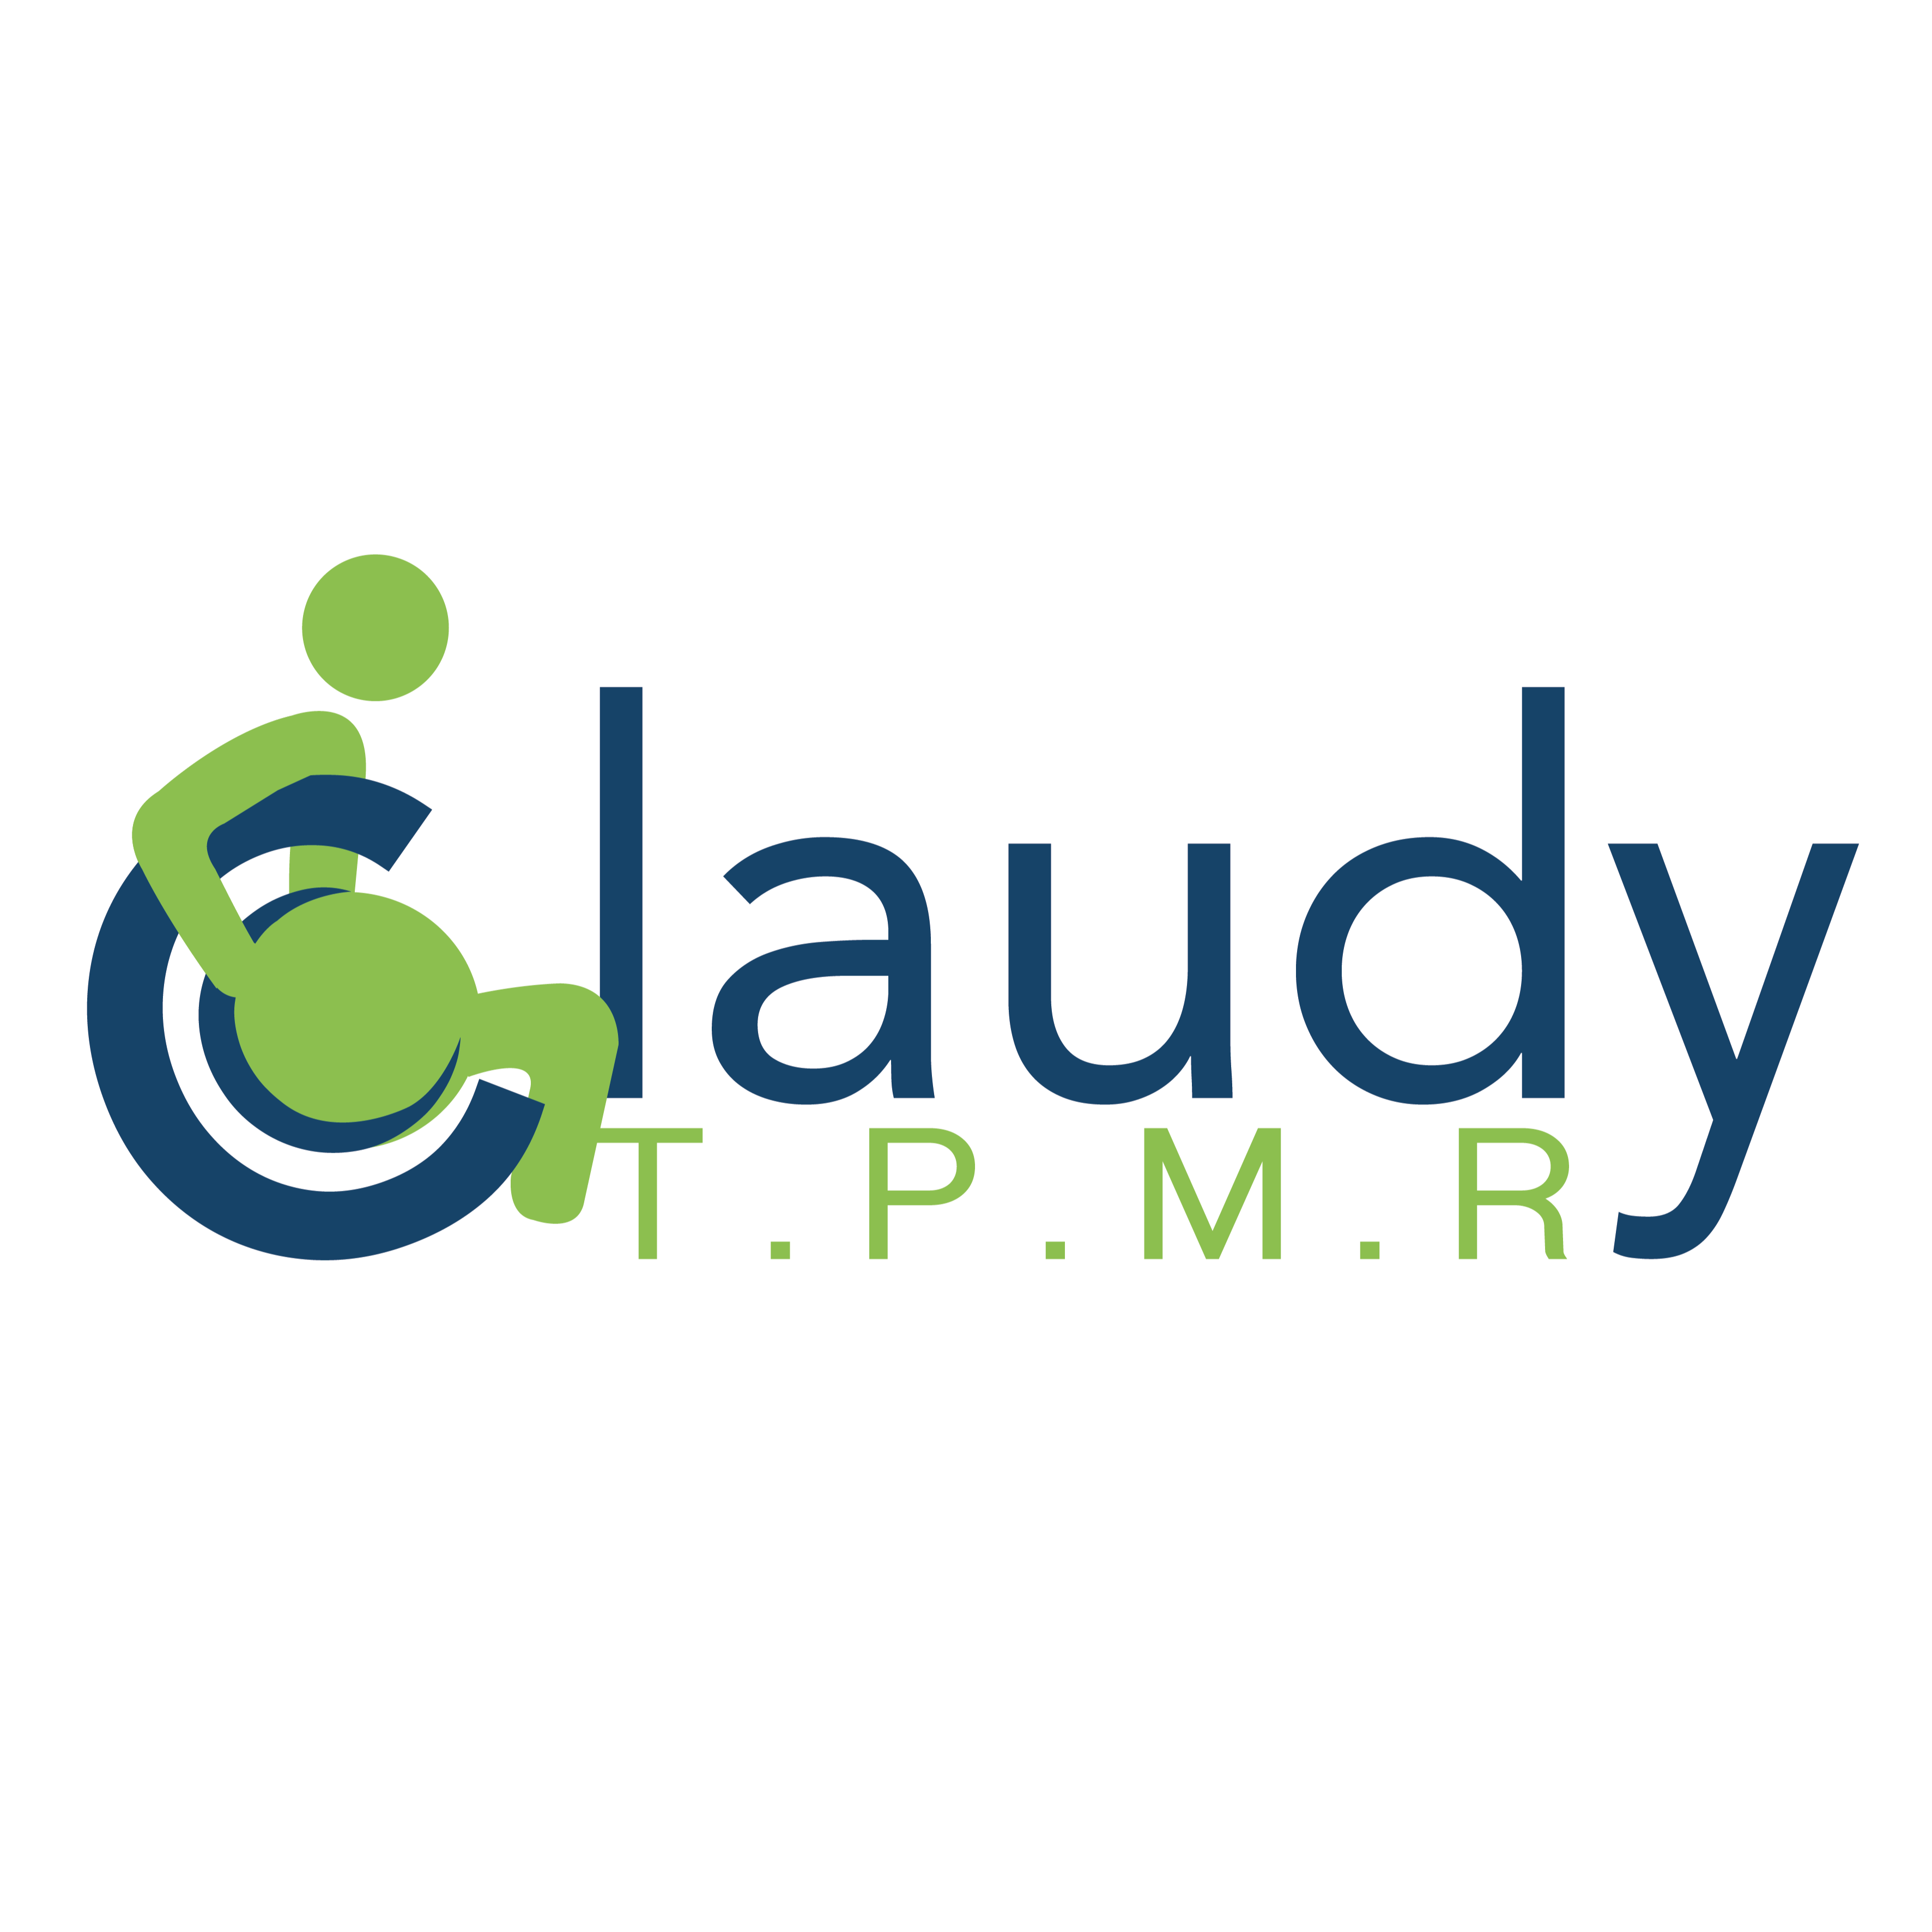 Claudy TPMR Logo